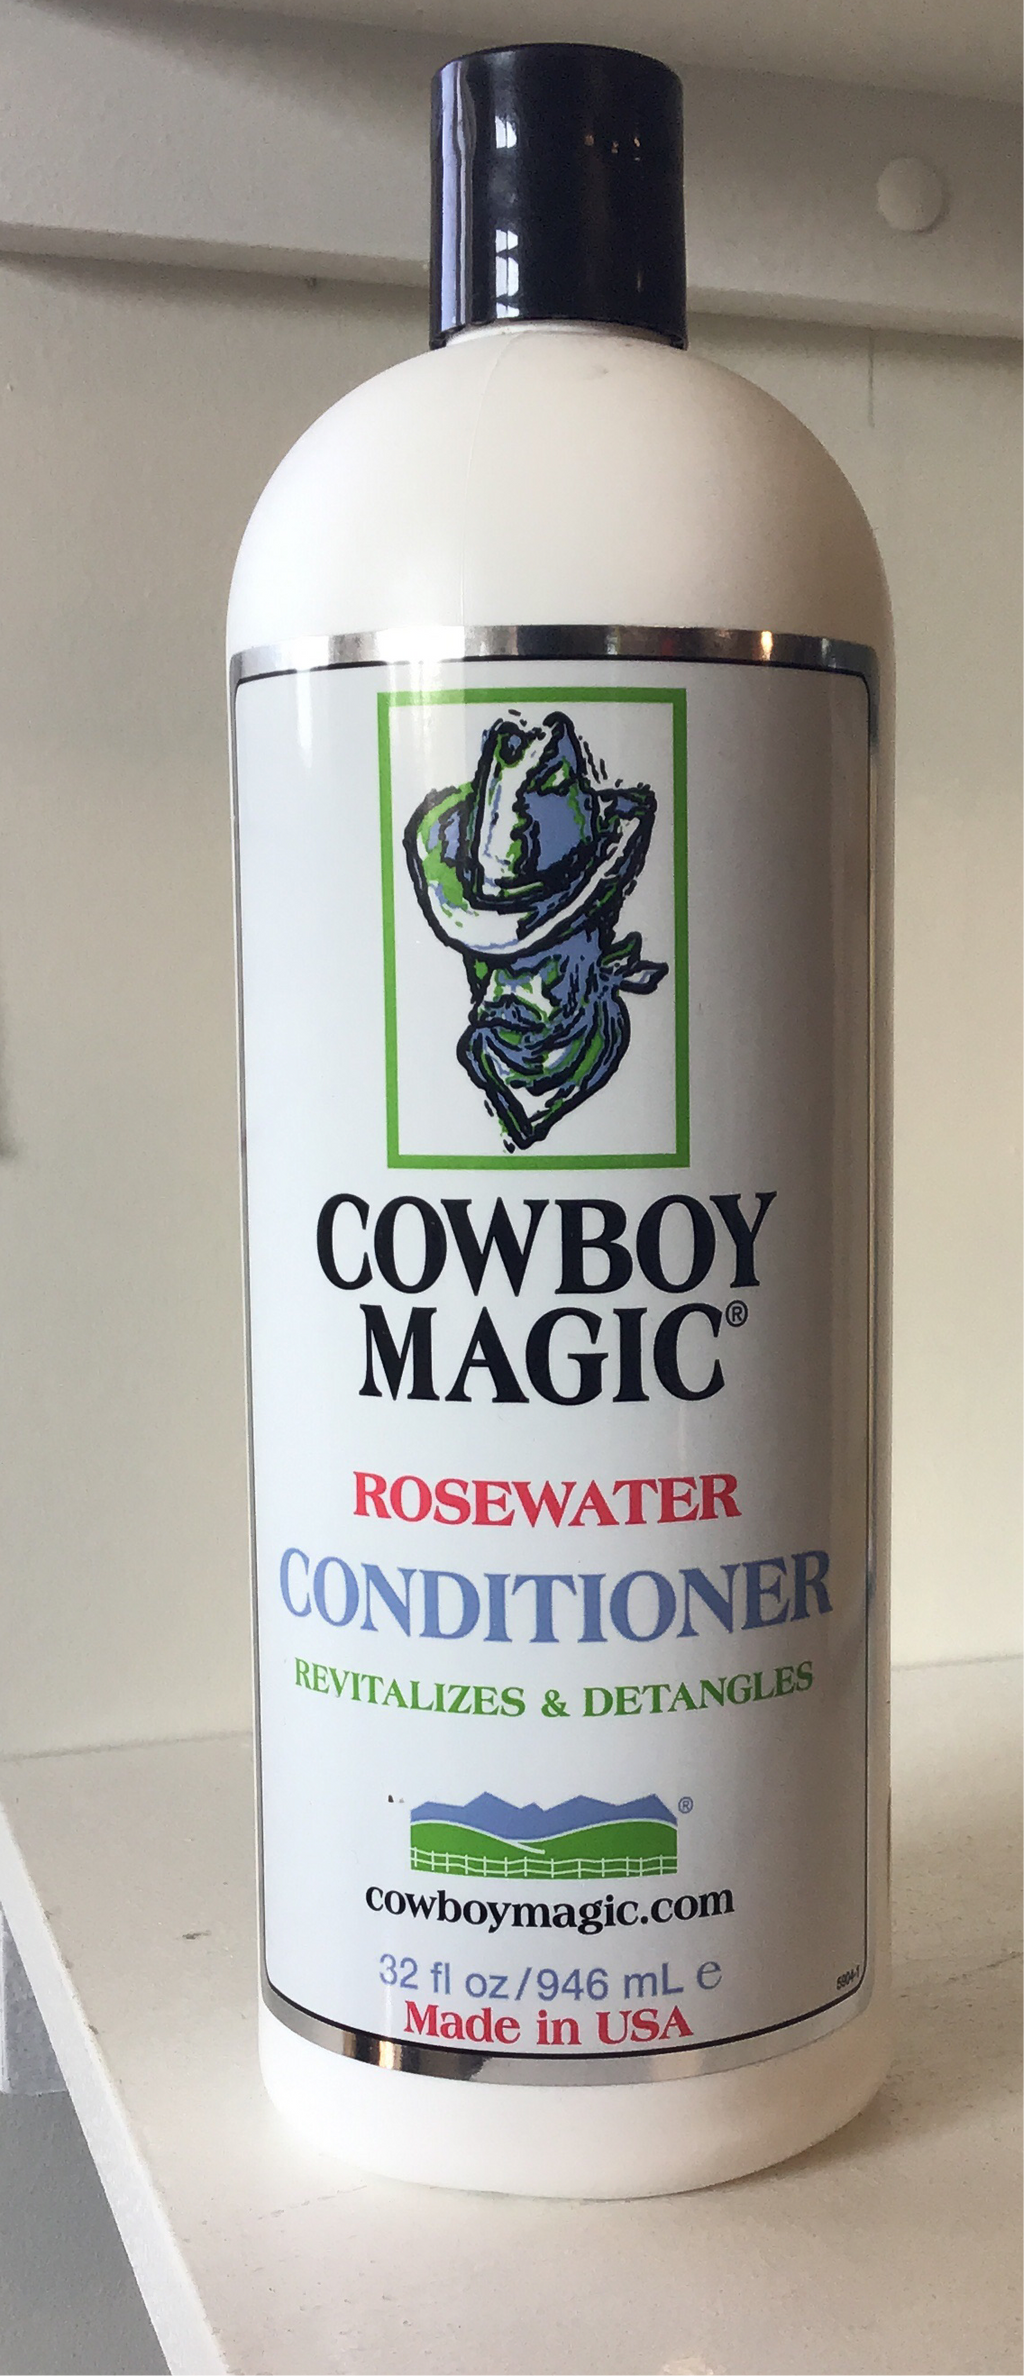 Cowboy magic rose water conditioner